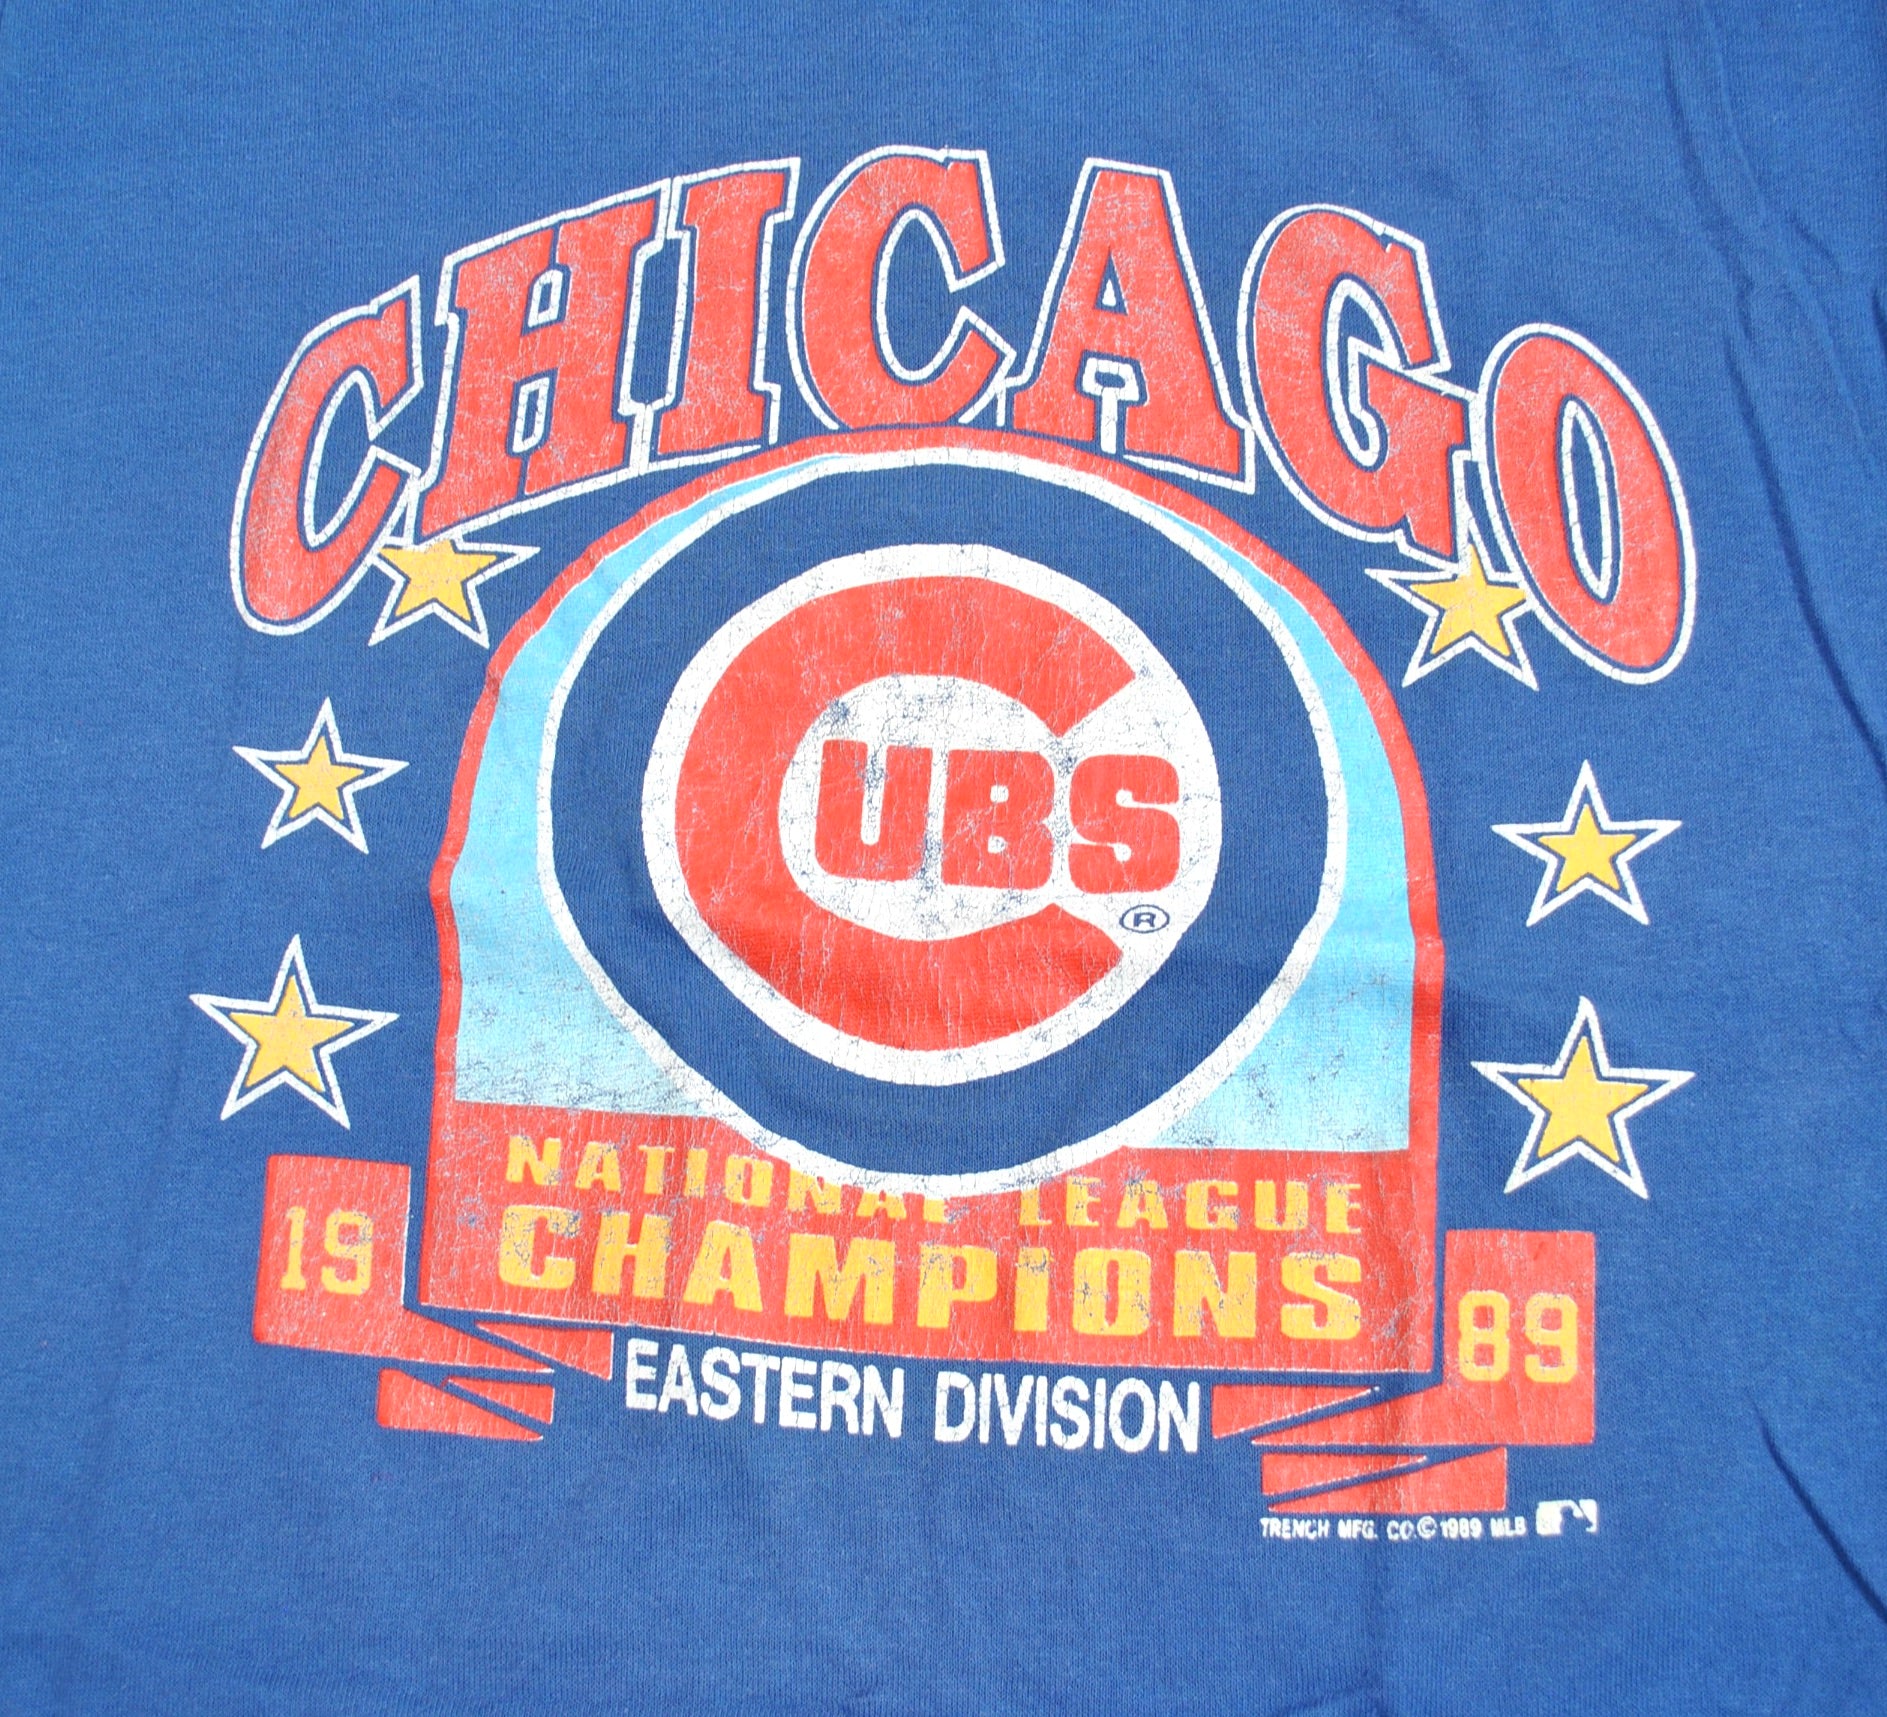 1989 cubs jersey